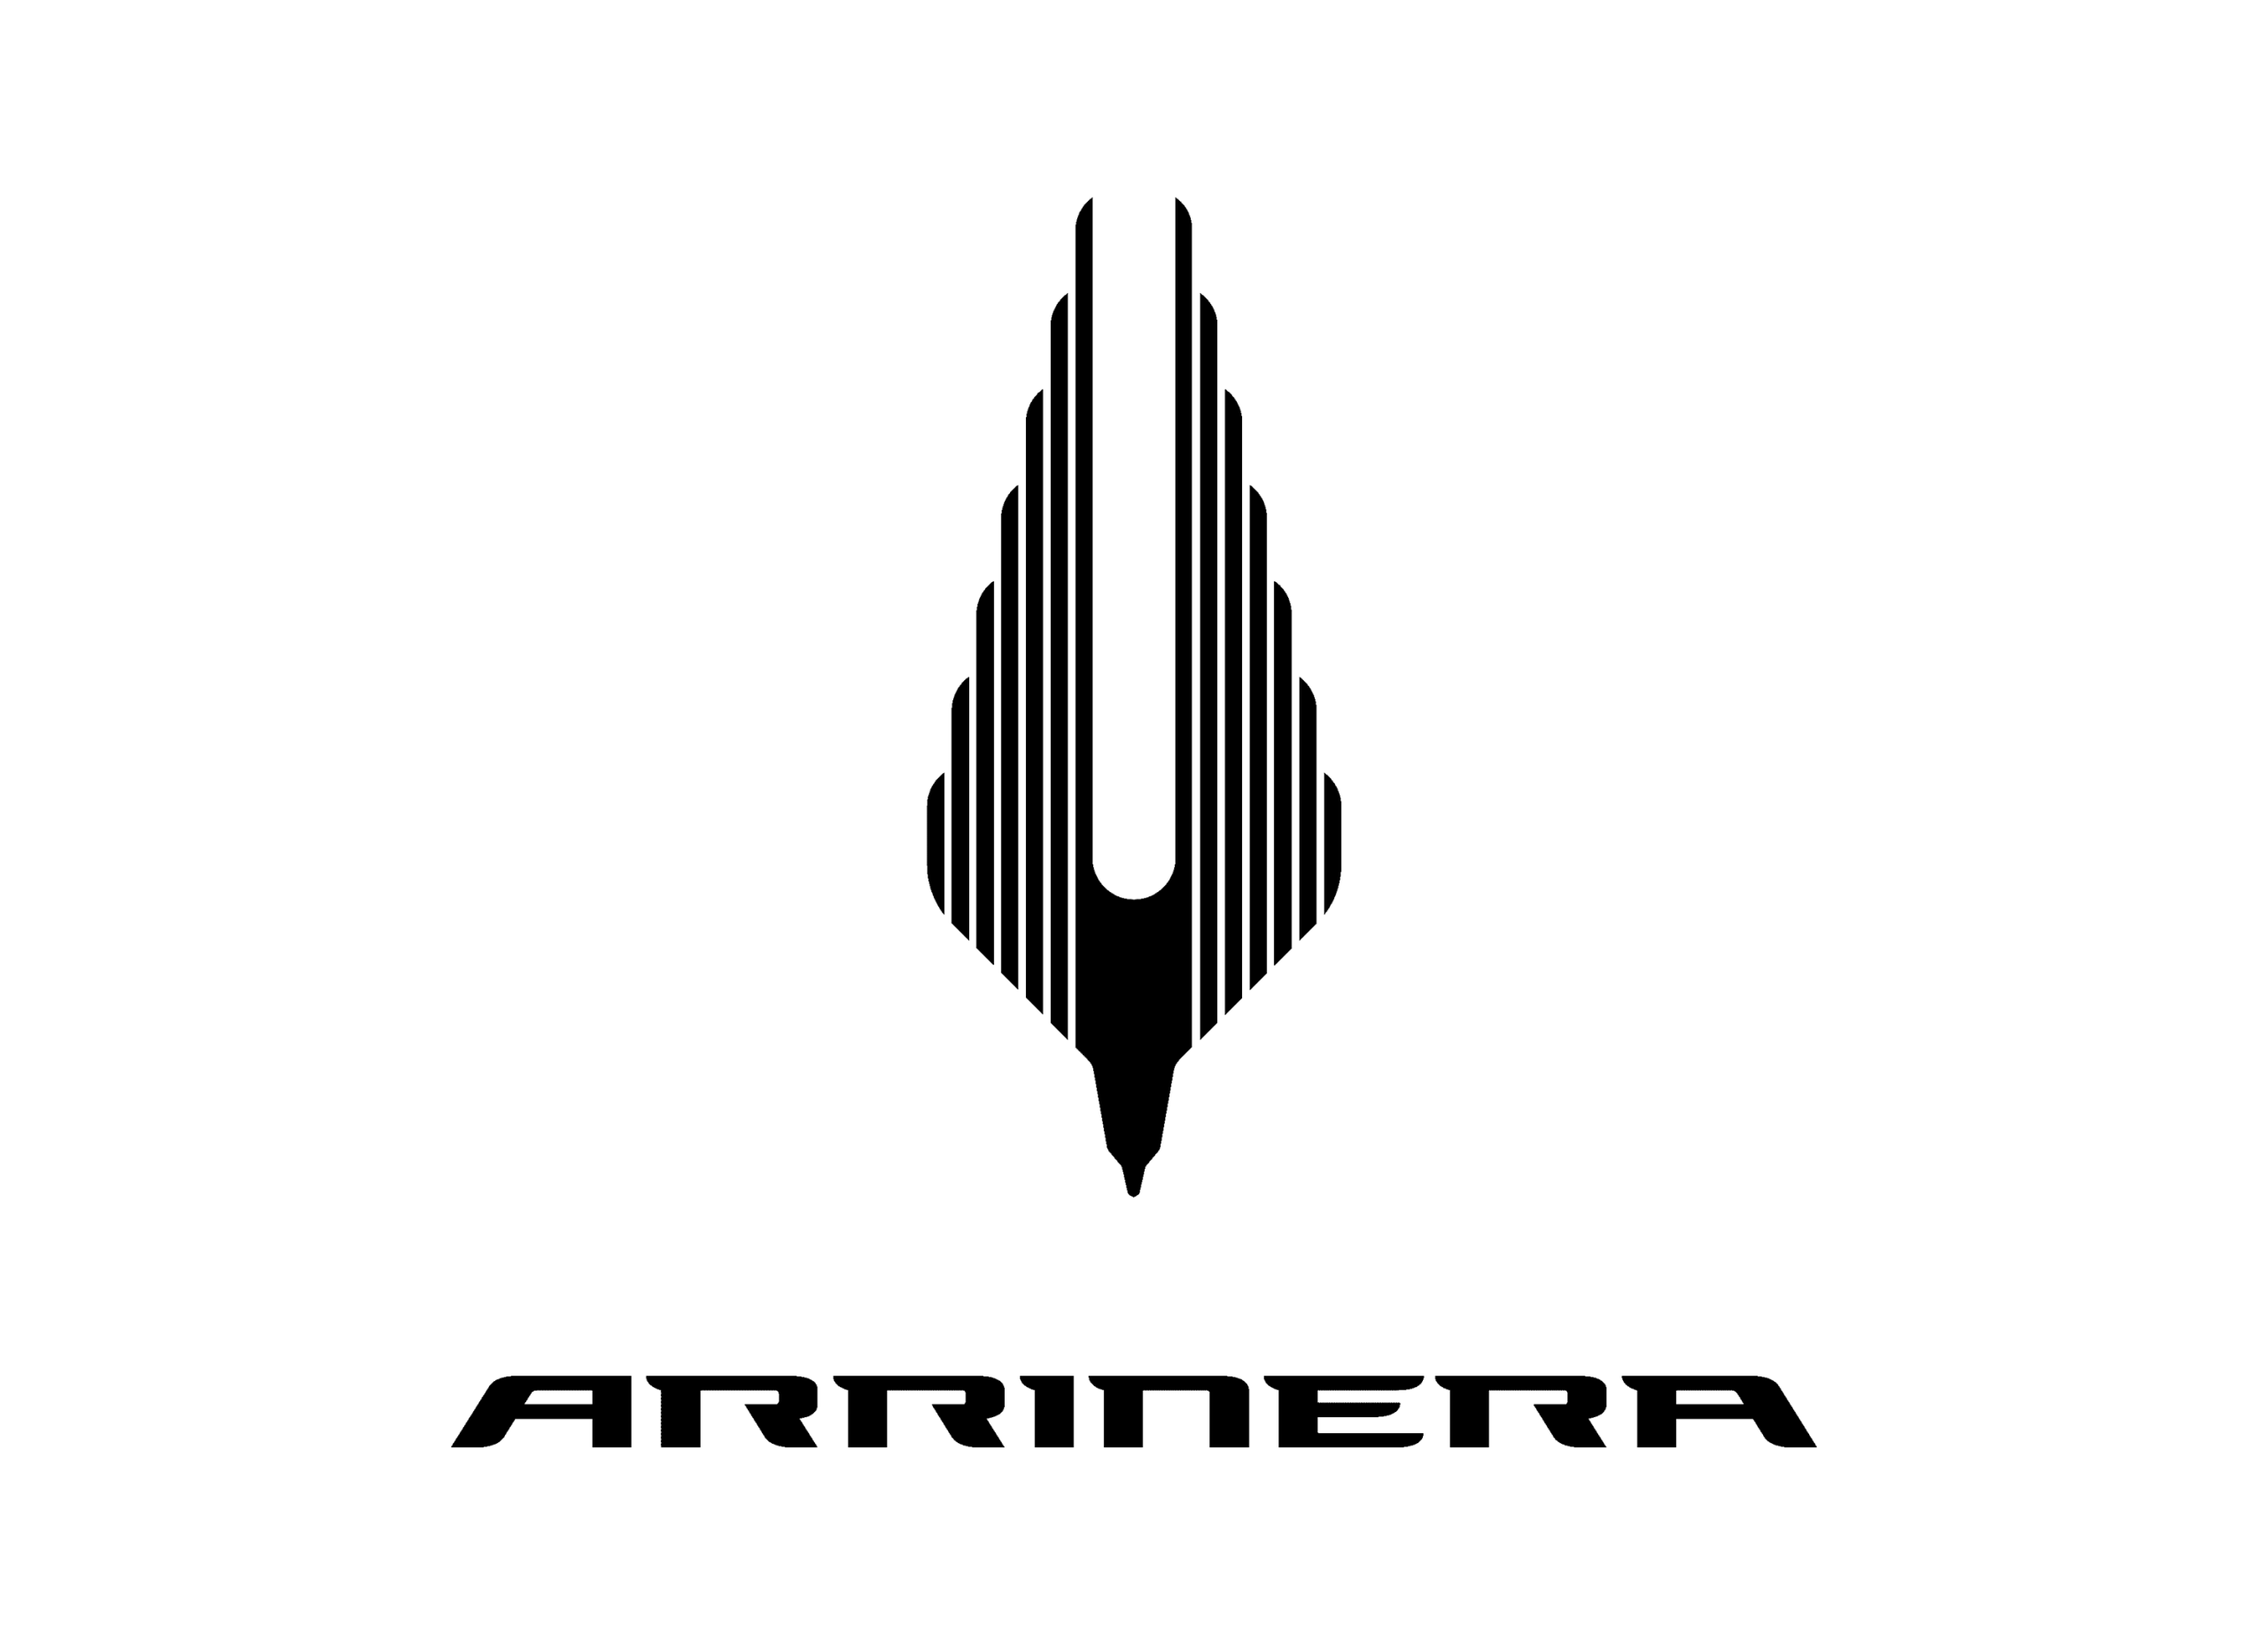 Arrinera logo 2016-present